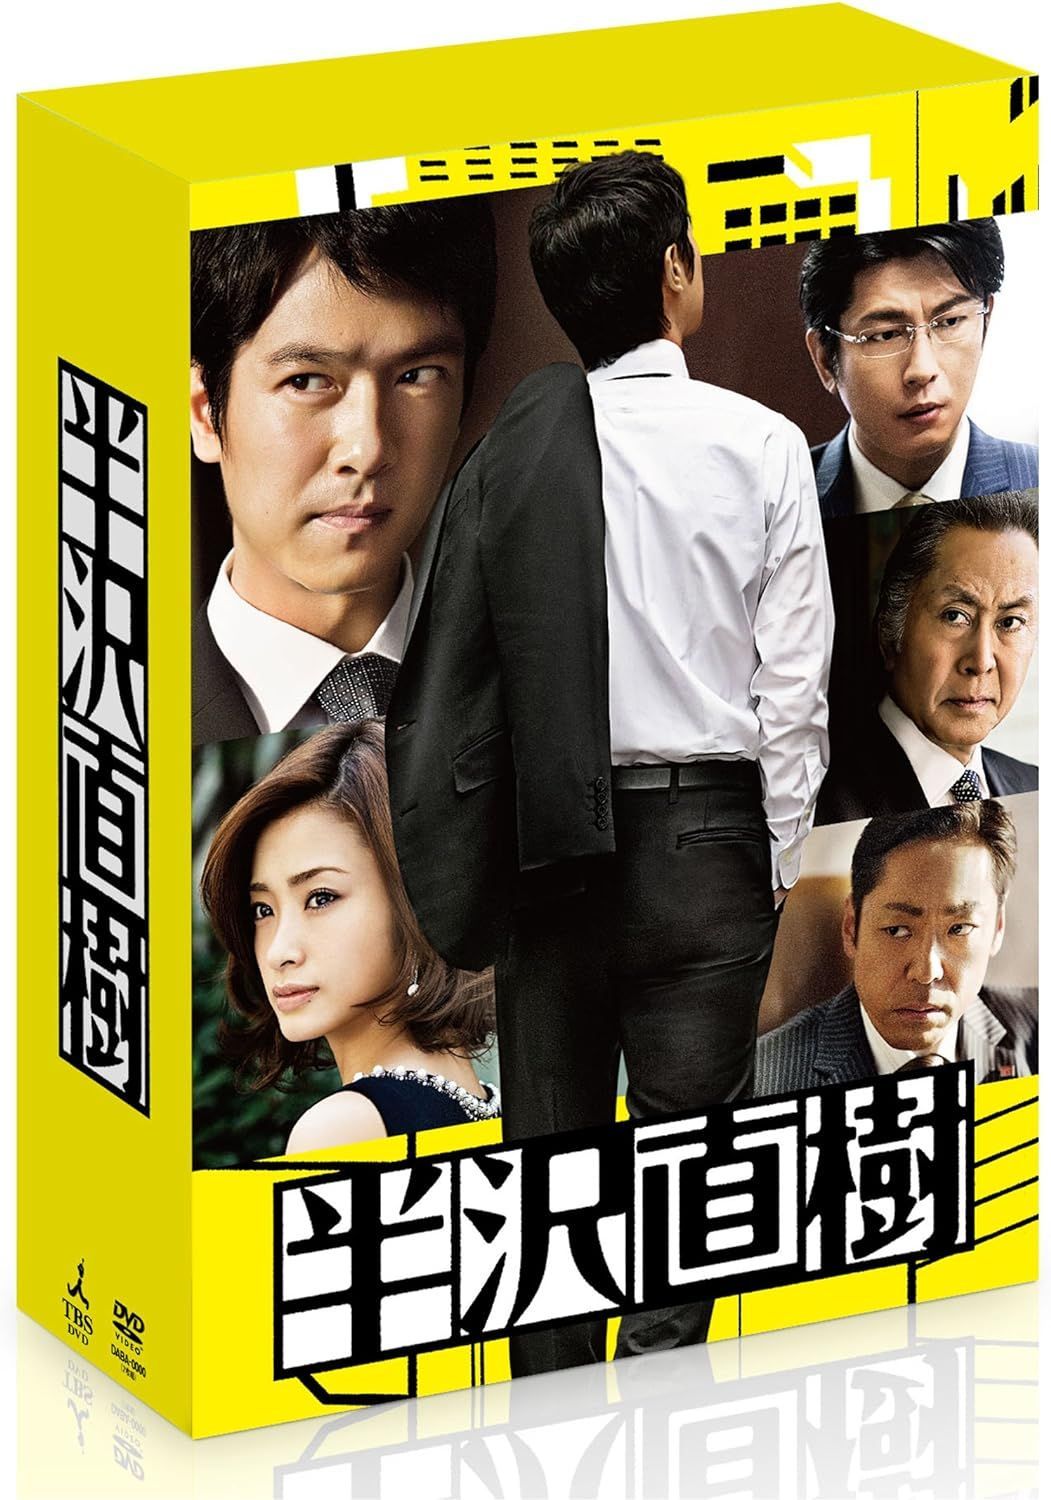 DVD/ブルーレイTVドラマ 半沢直樹 DVD-BOX(2013+2020) 全20話収録 - TV 